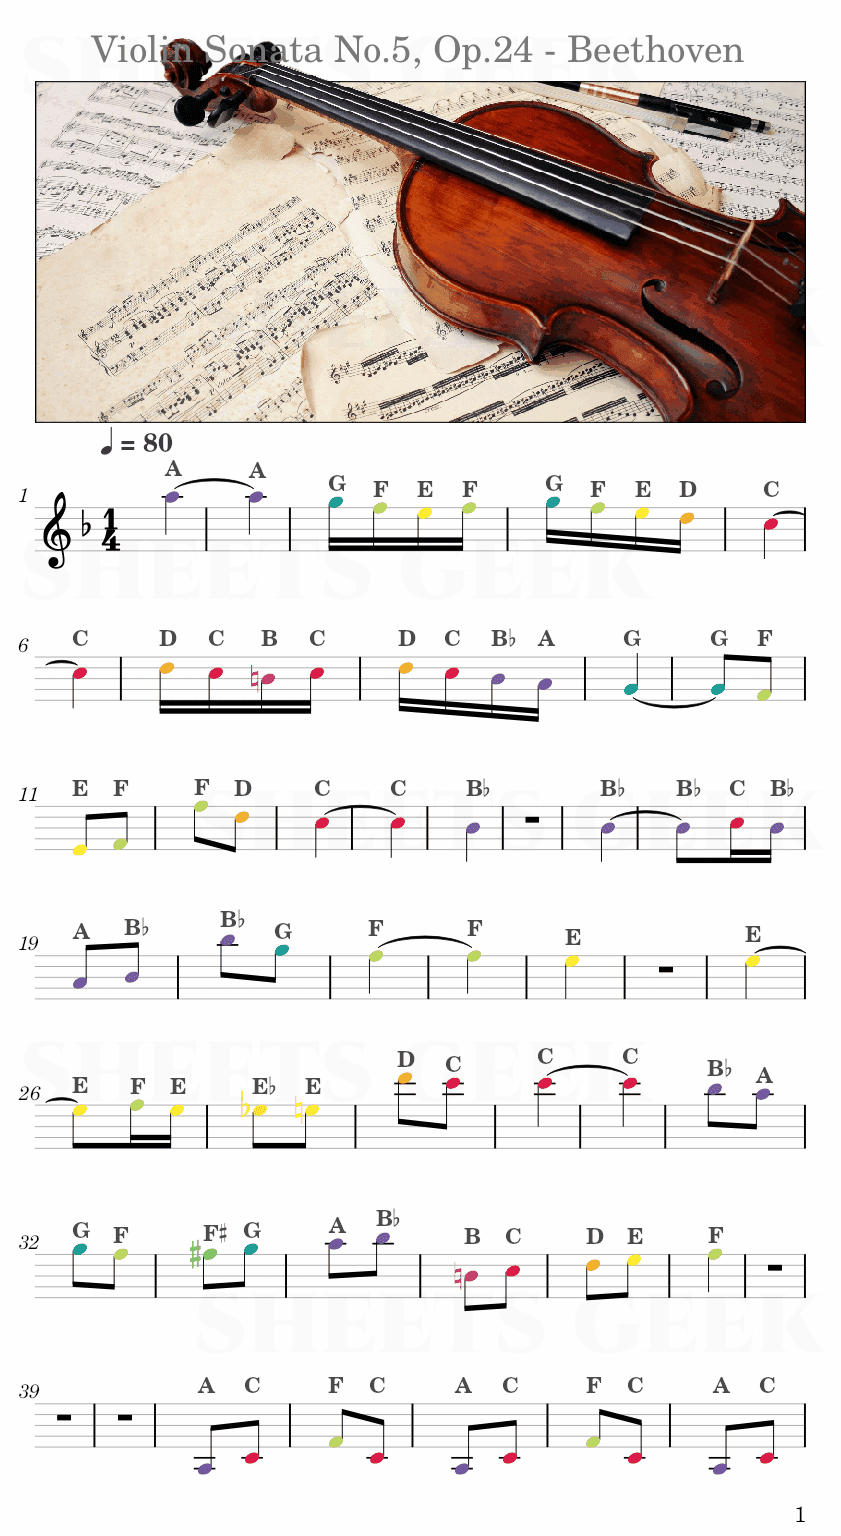 Violin Sonata No.5, Op.24 - Ludwig Van Beethoven Easy Sheet Music Free for piano, keyboard, flute, violin, sax, cello page 1